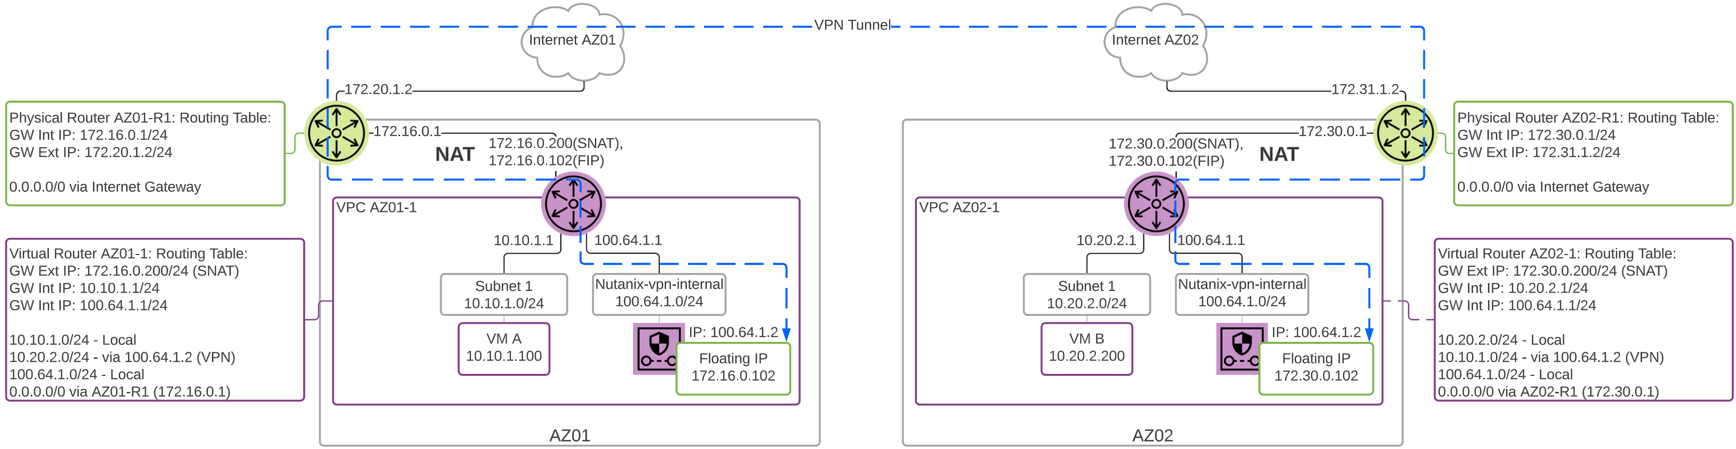 Flow Virtual Networking - Layer 3 VPN NAT Detail